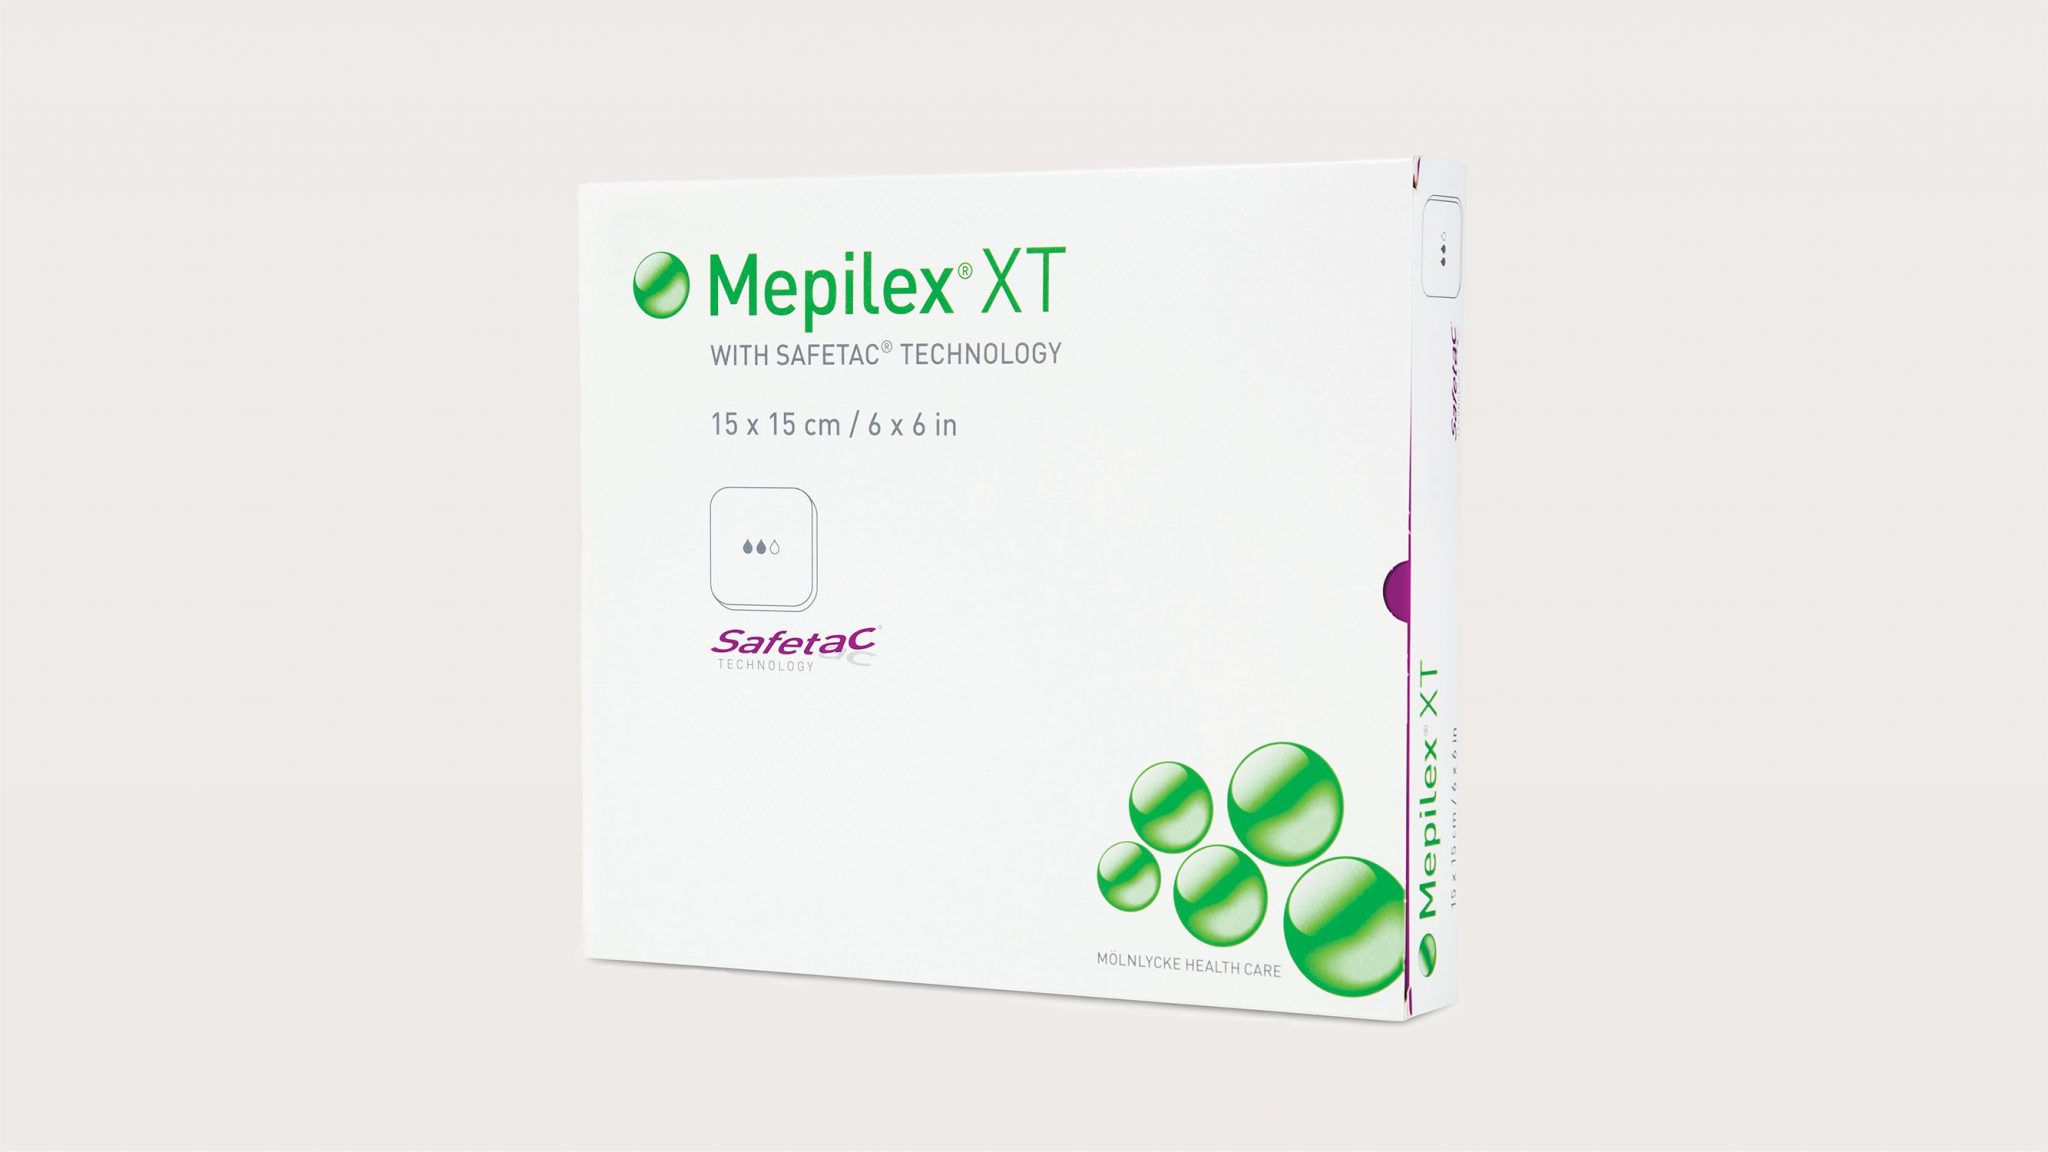 Mepilex XT image